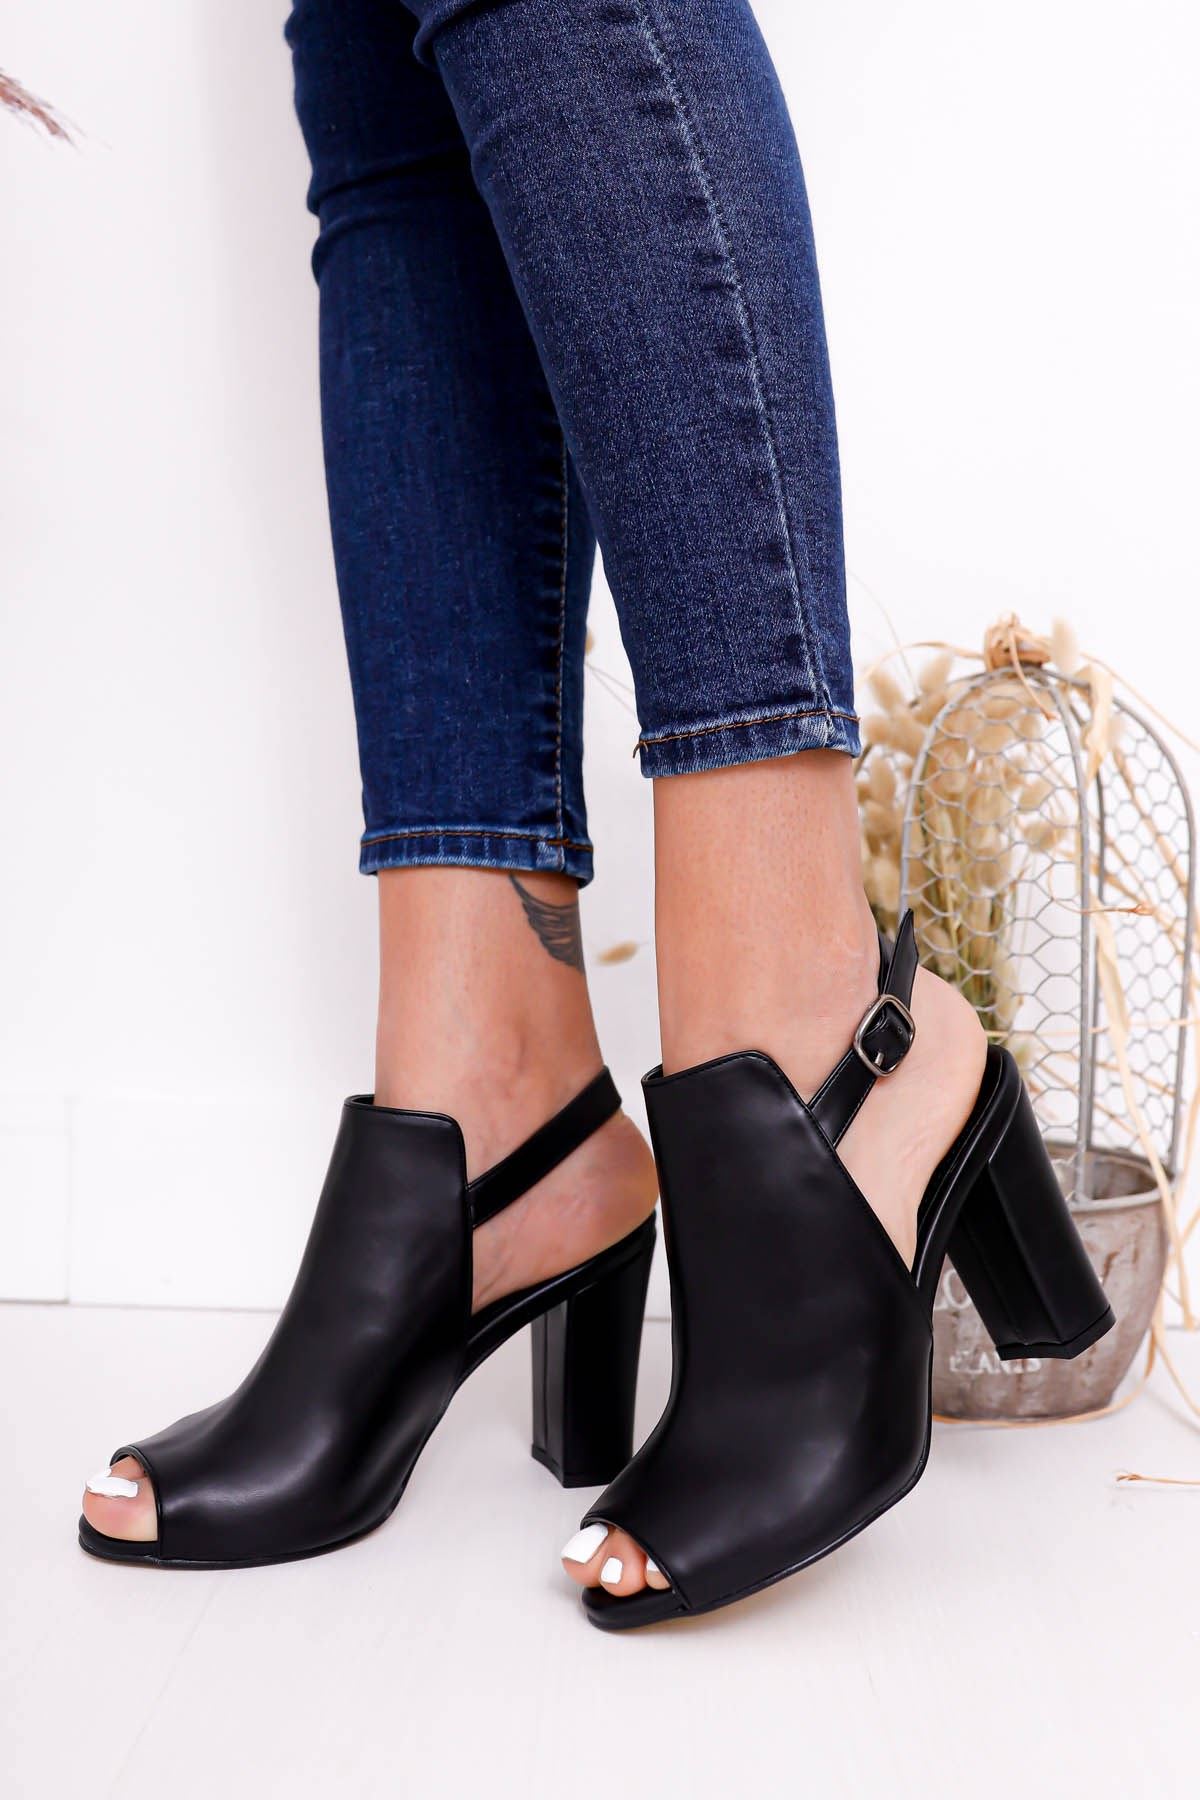 Quinn Topuklu Siyah Cilt Ayakkabı